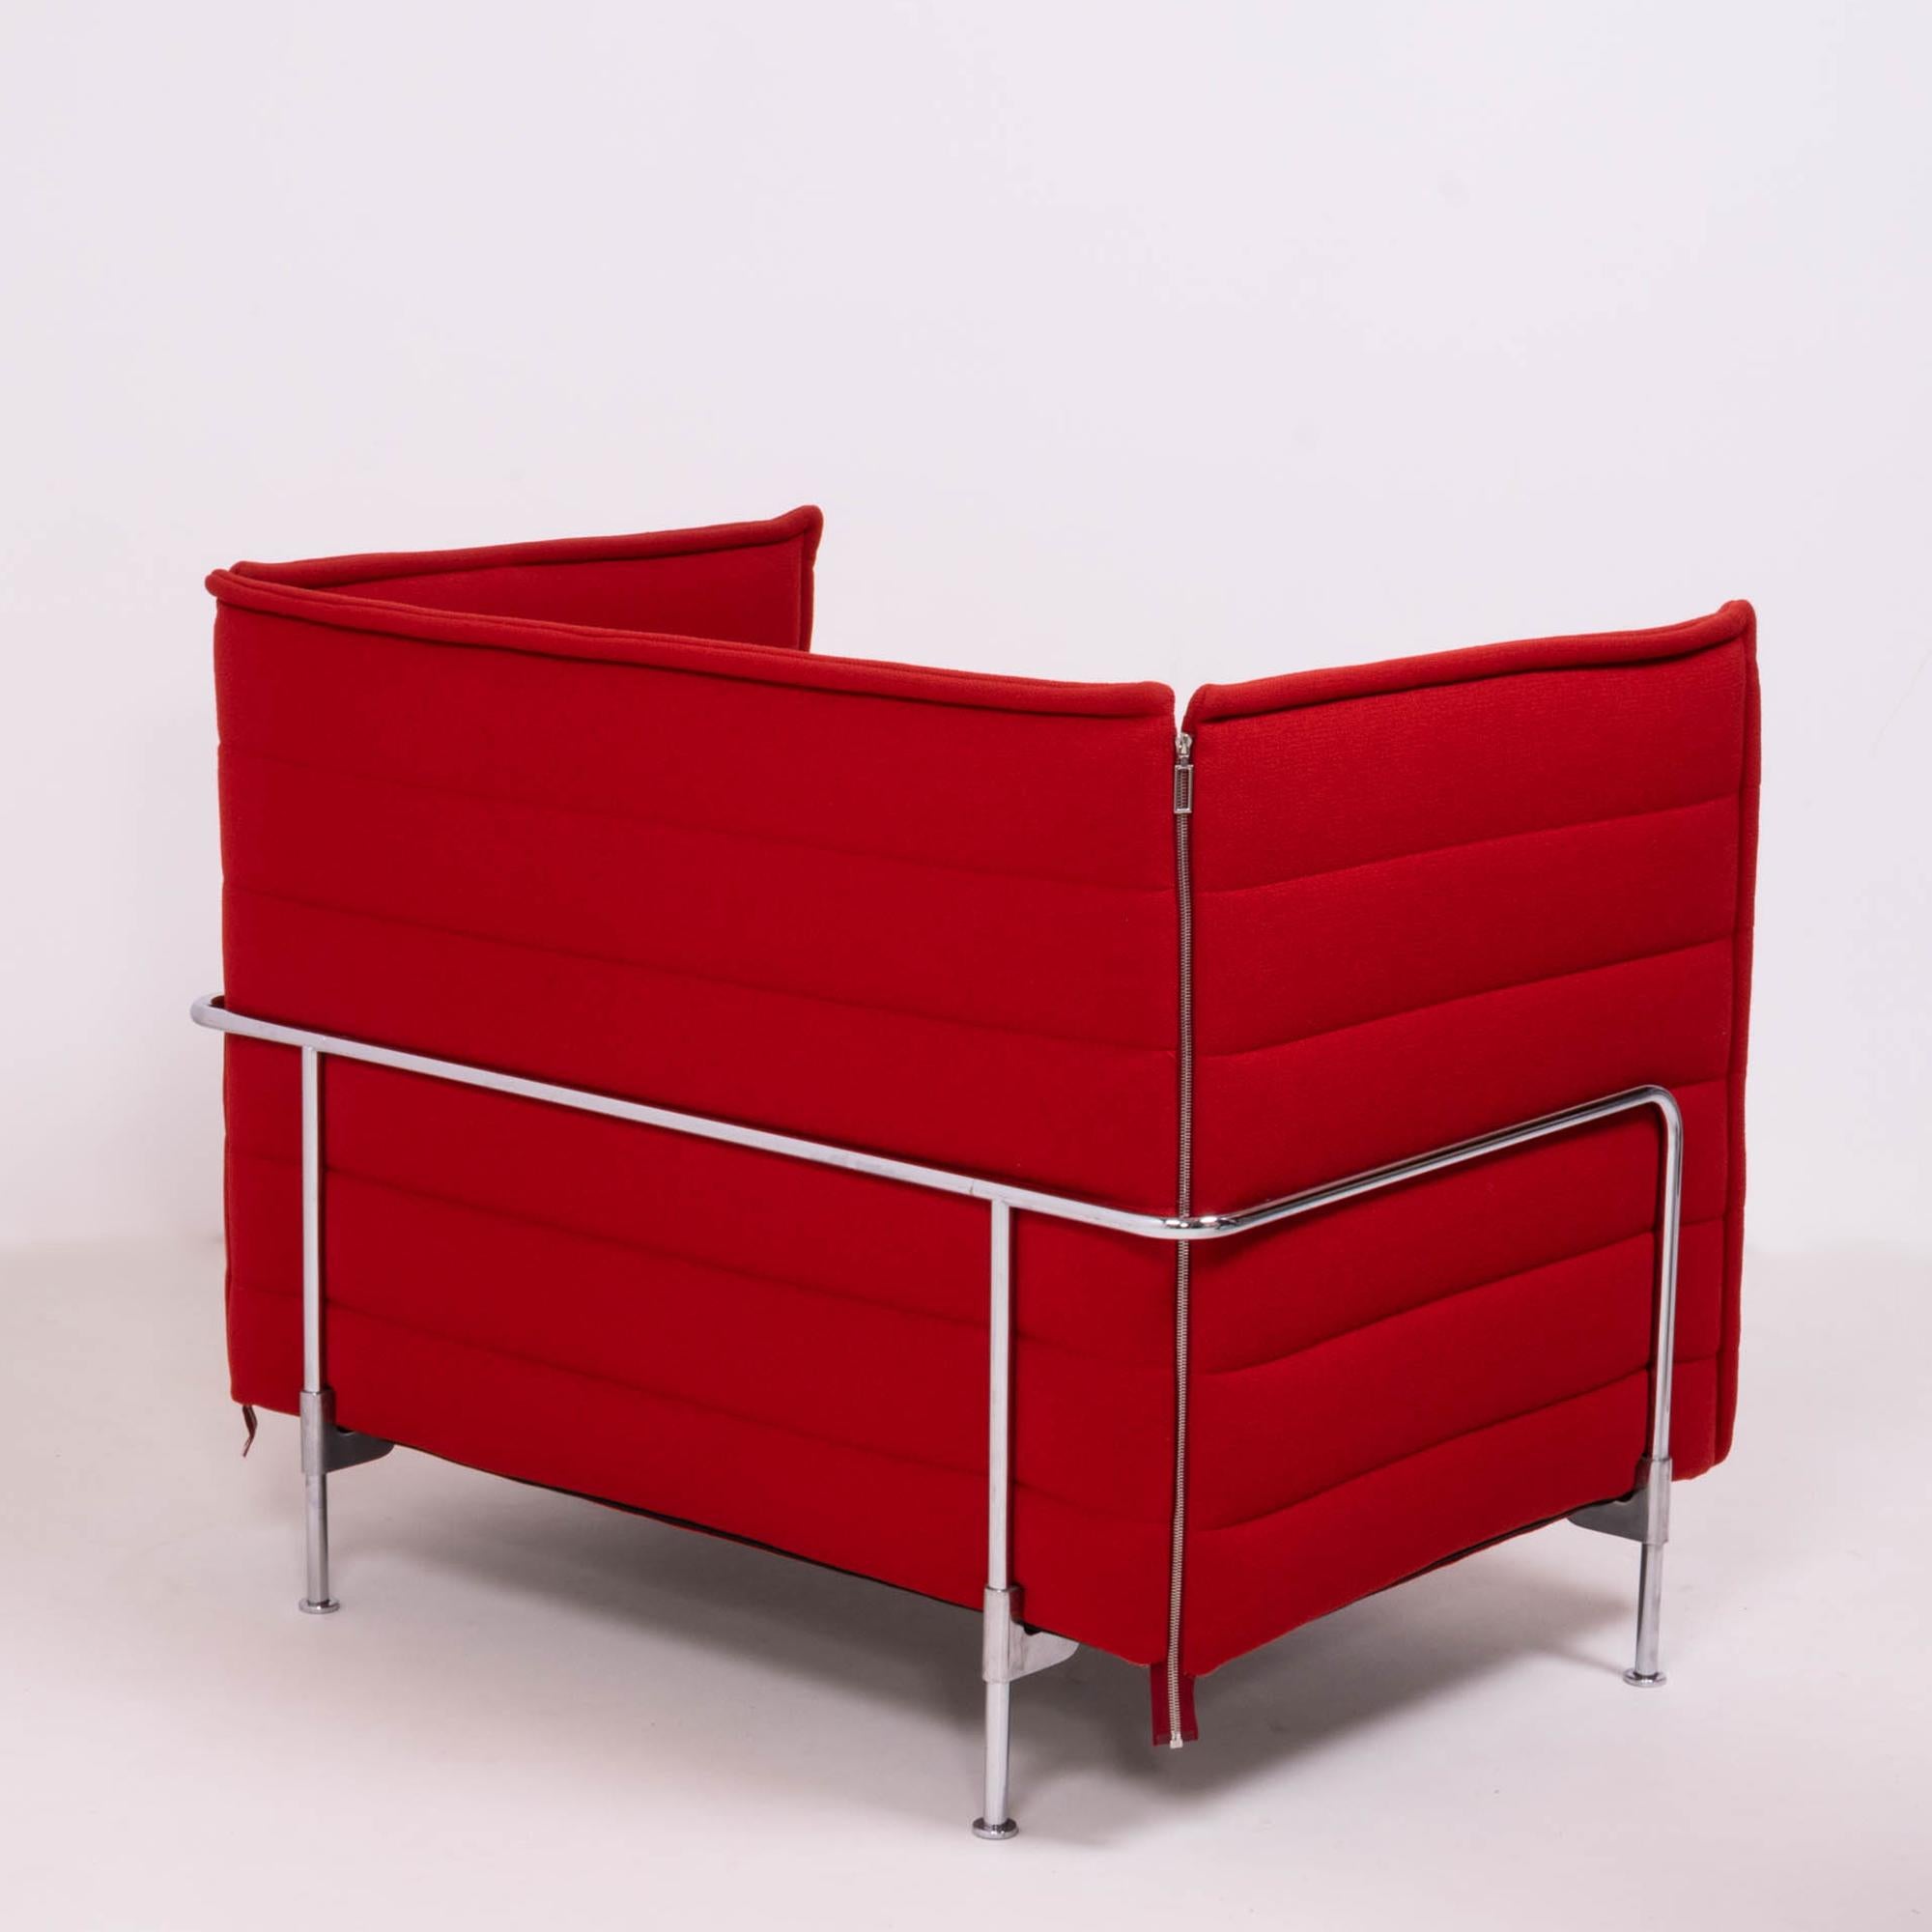 German Vitra Alcove Red Loveseat Sofa by Ronan & Erwan Bouroullec